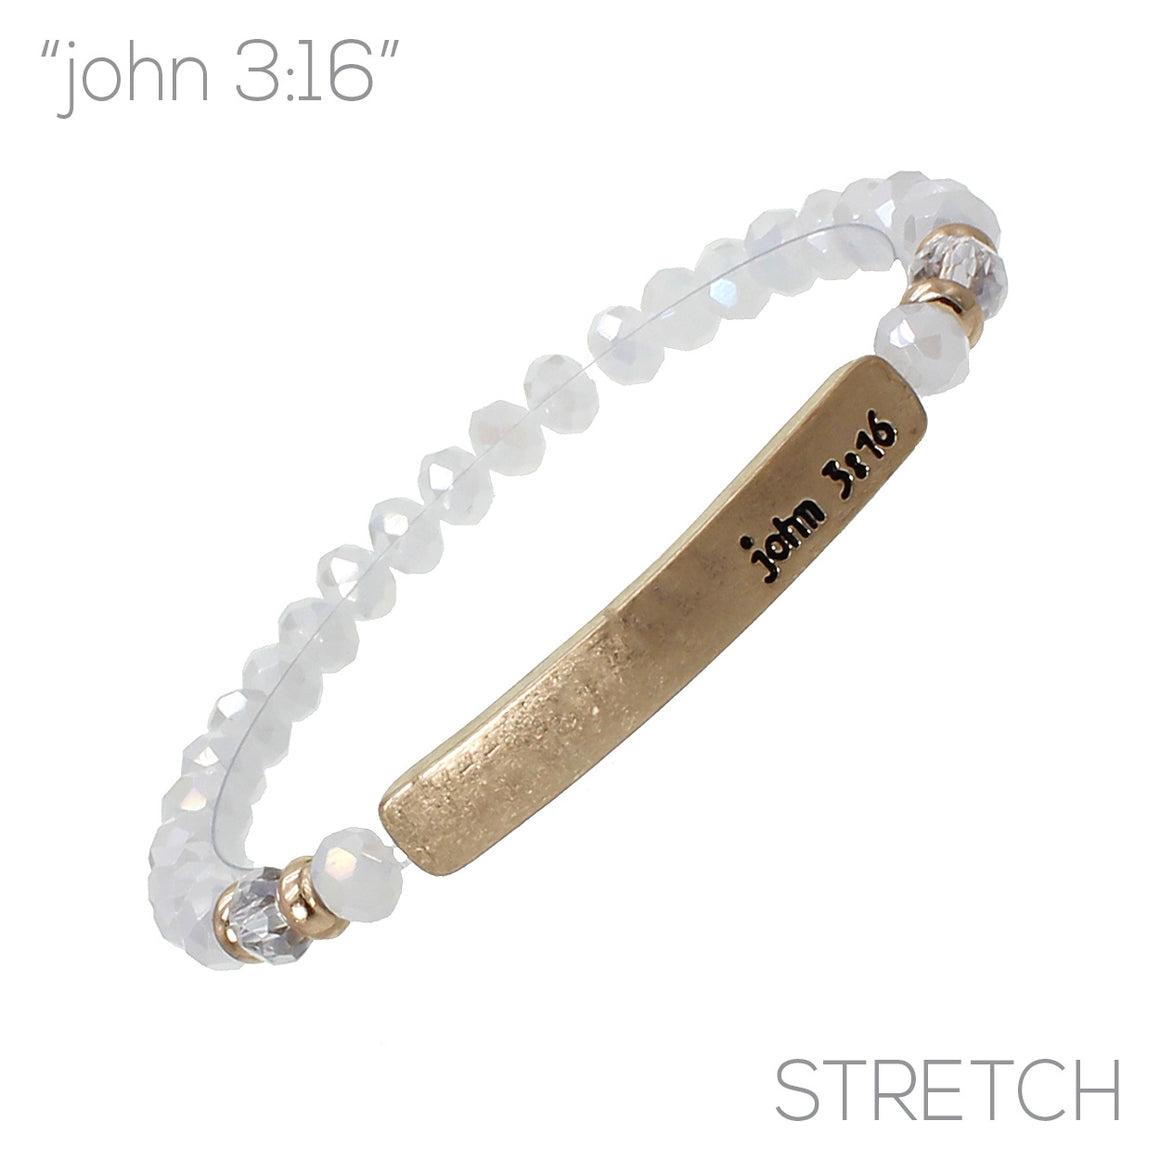 "John 3:16" Glass Bead Stretch Bracelet